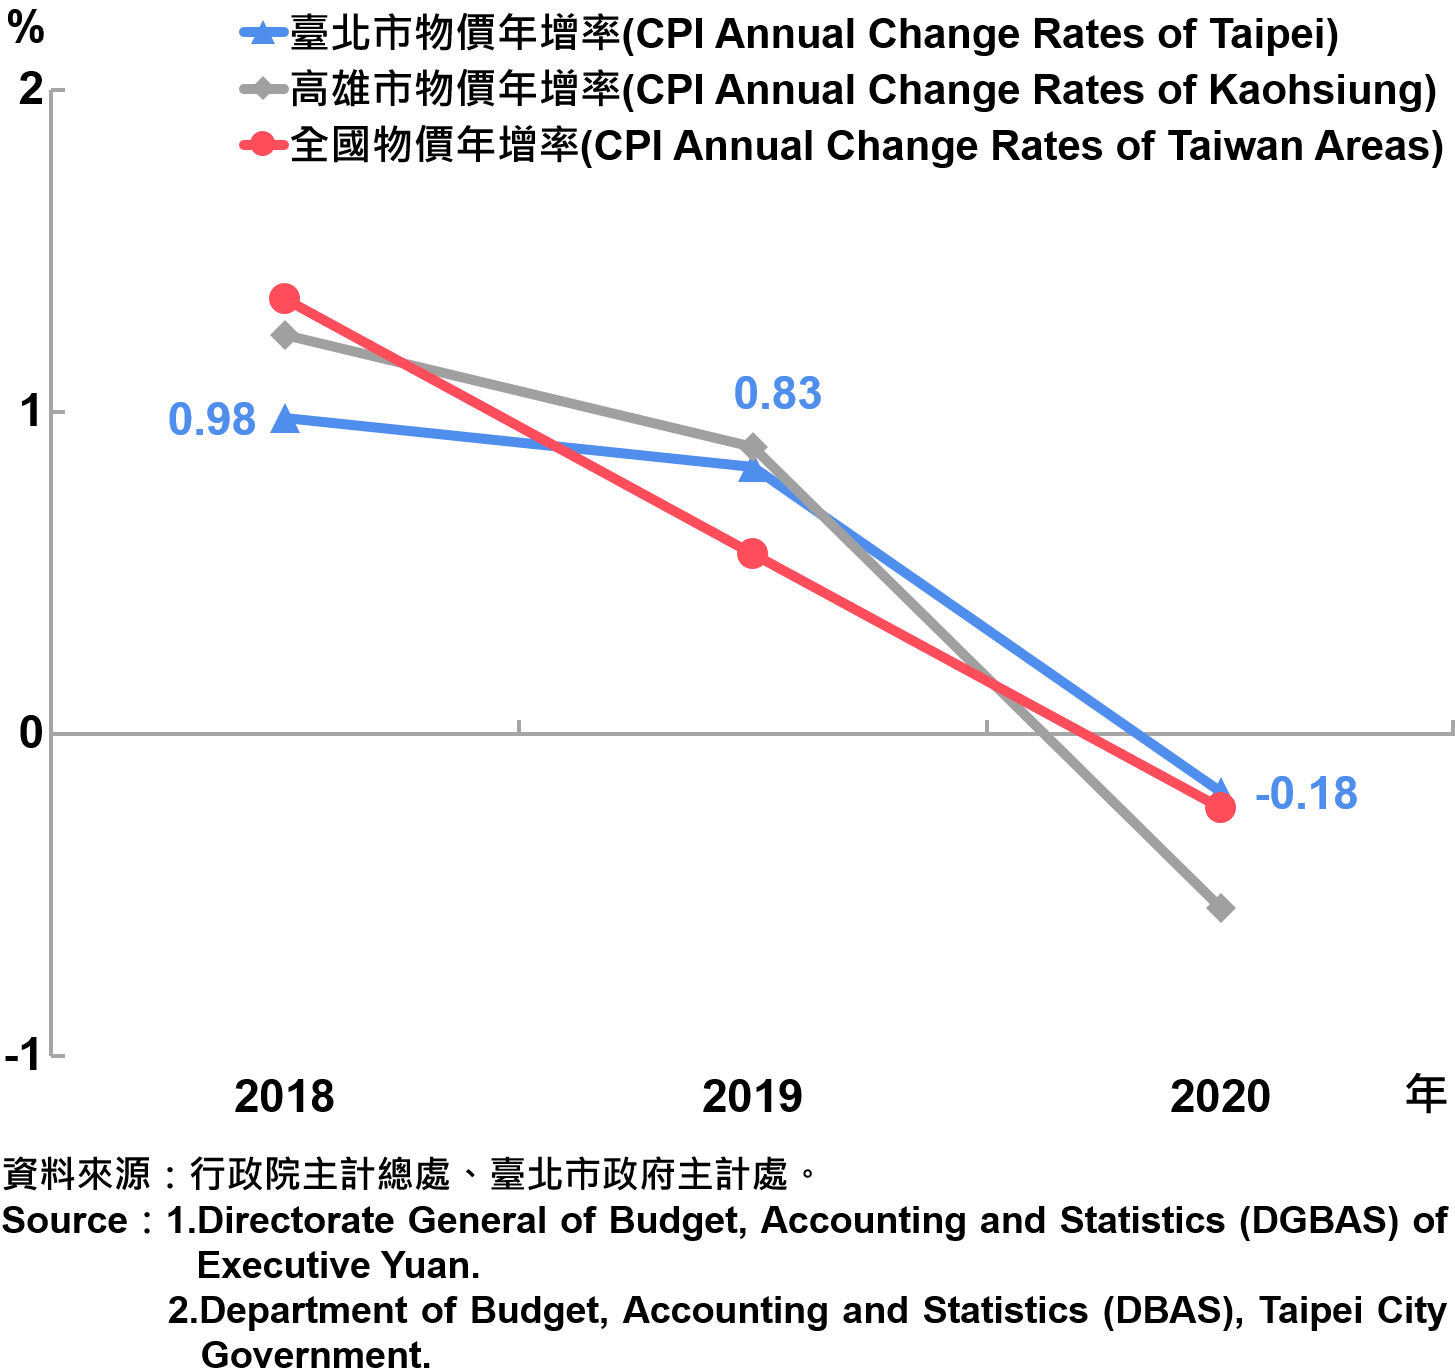 臺北市消費者物價指數（CPI）年增率—2020 The Changes of CPI in Taipei City—2020